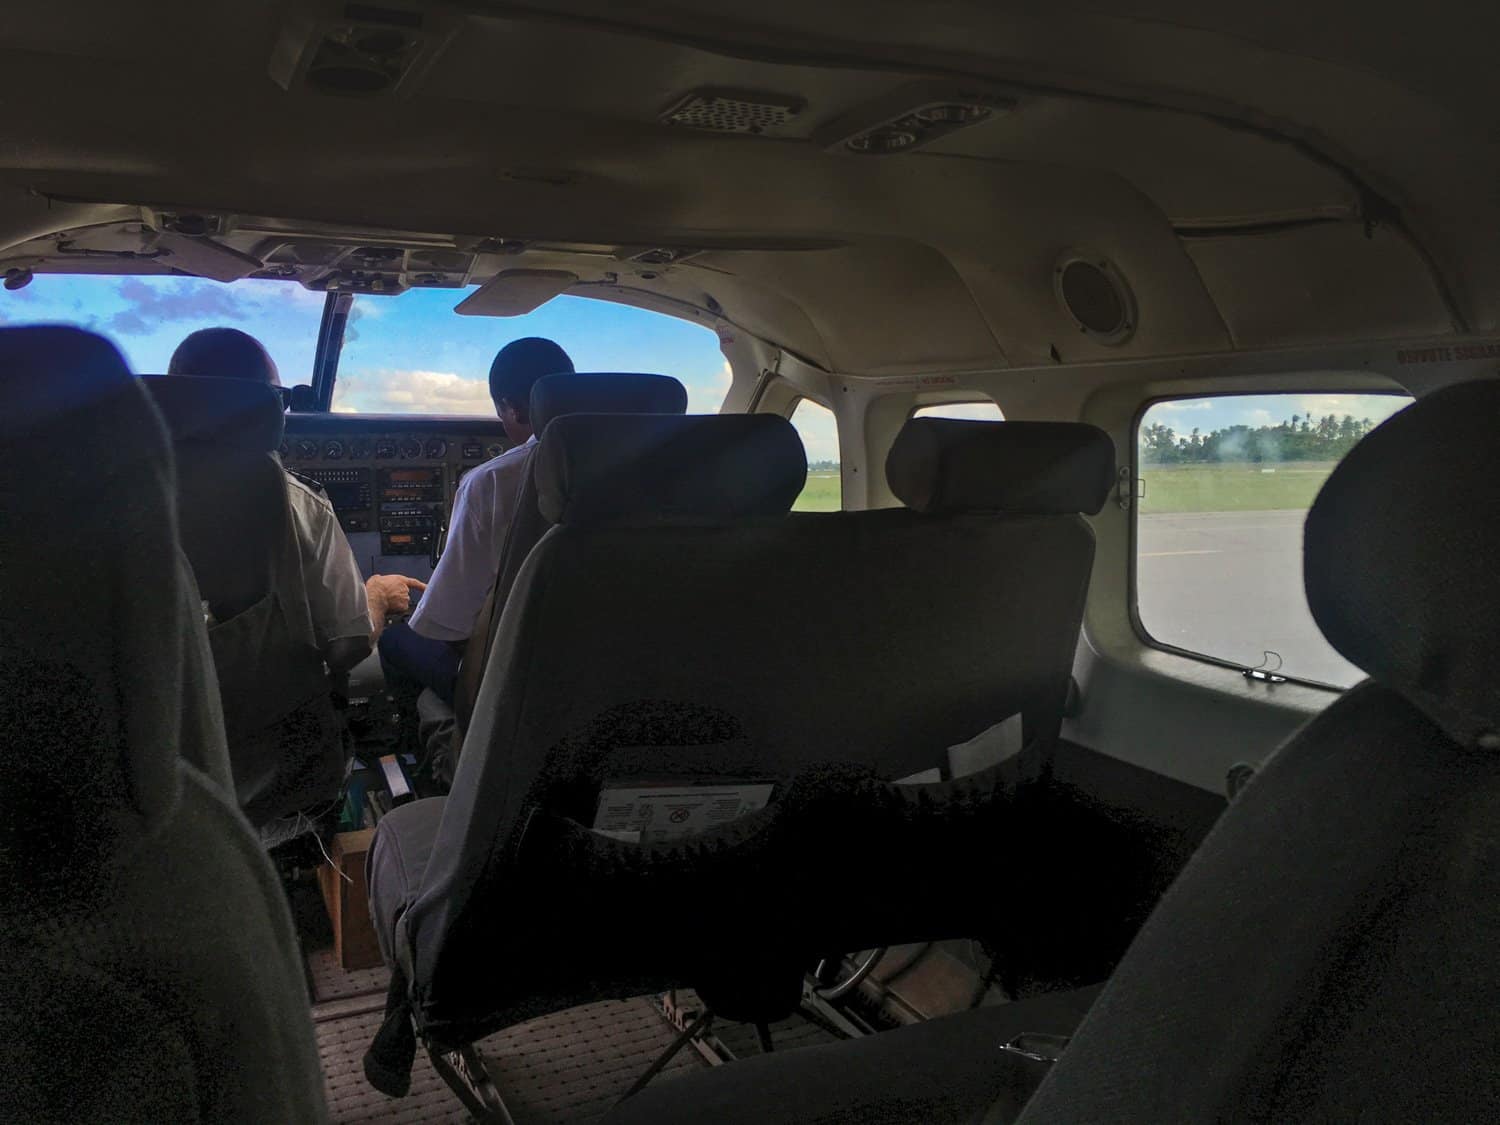 Inside Flightlink prop plane